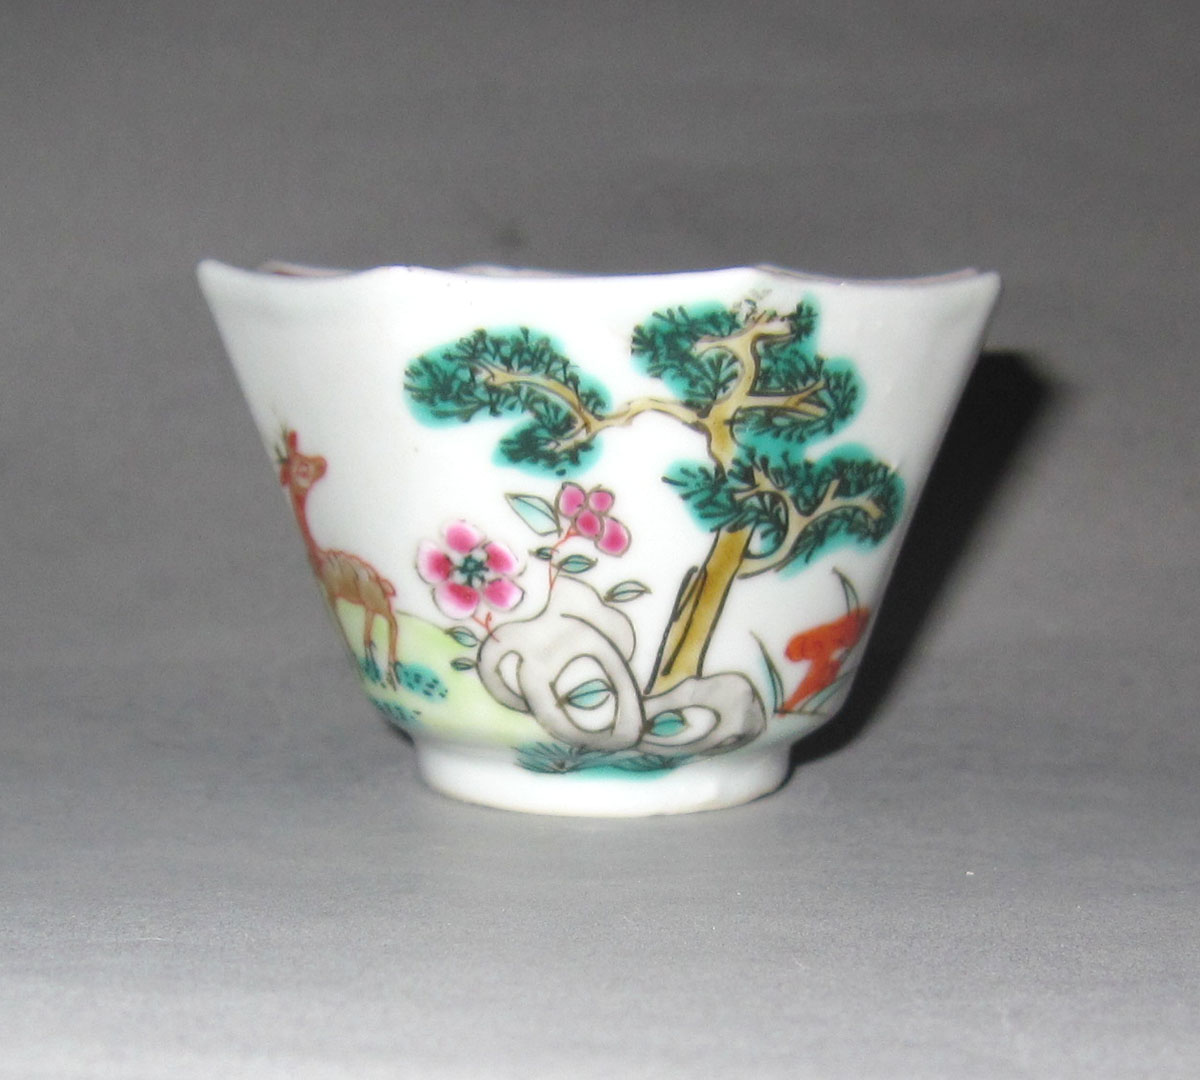 1953.0156.004 A Porcelain teacup